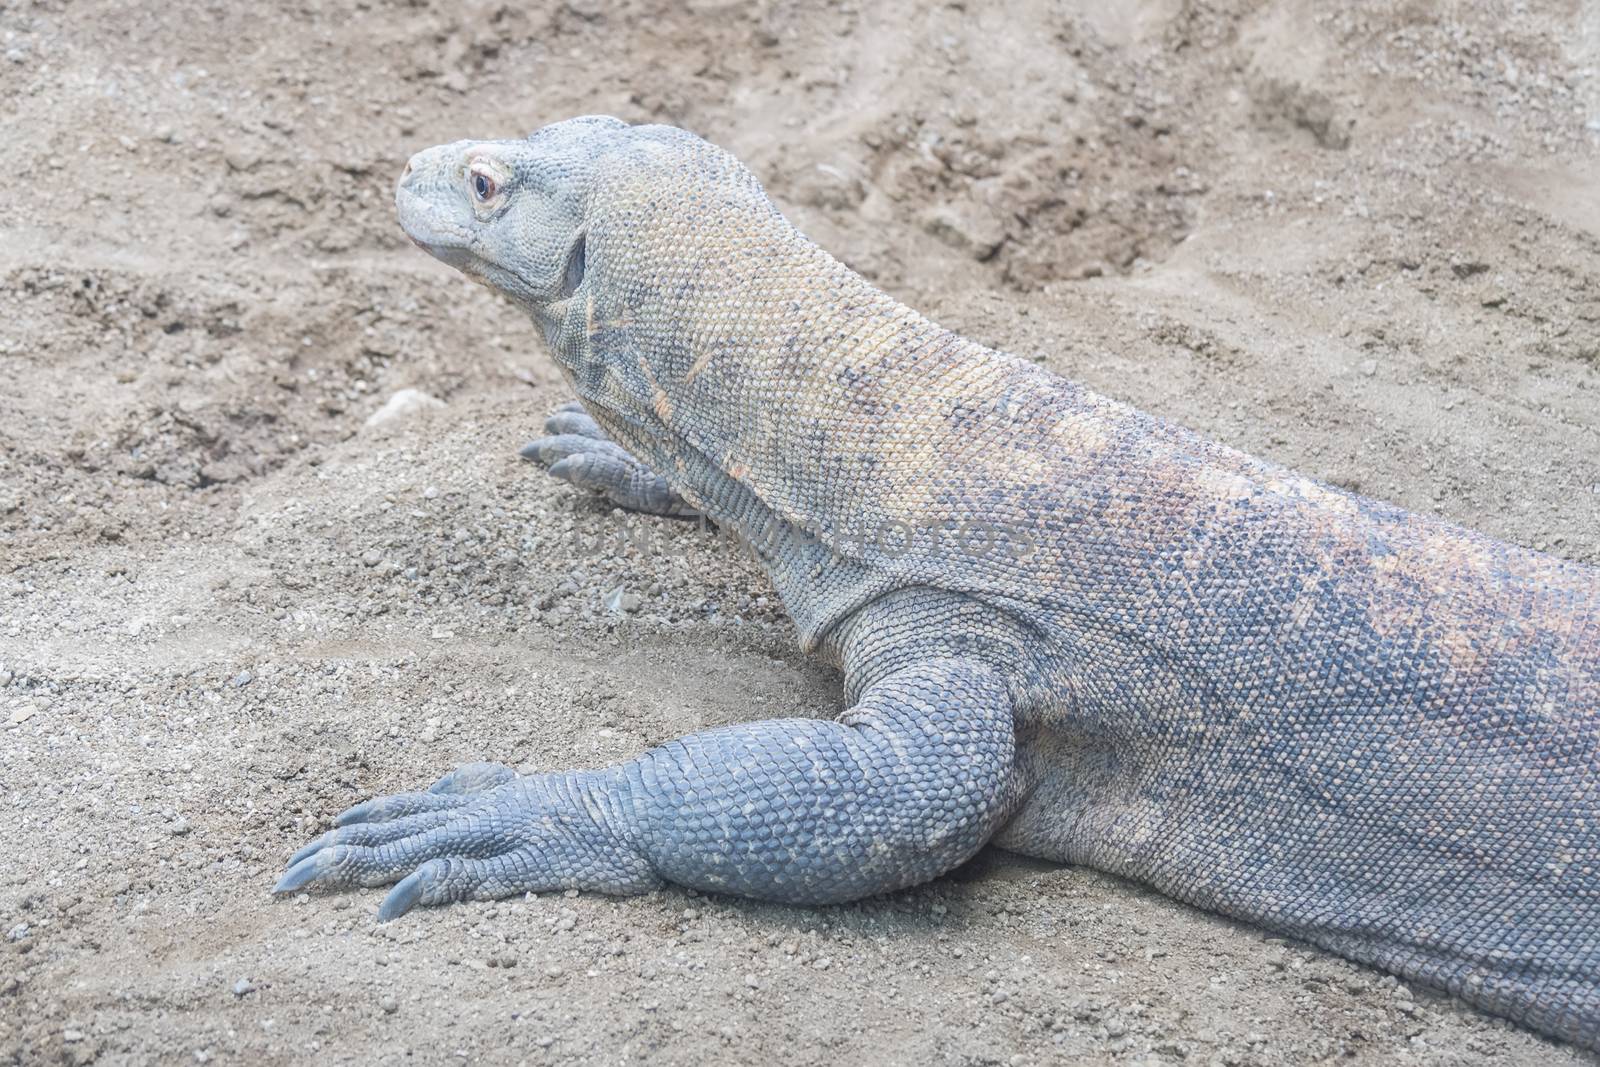 Komodo dragon resting on the sand